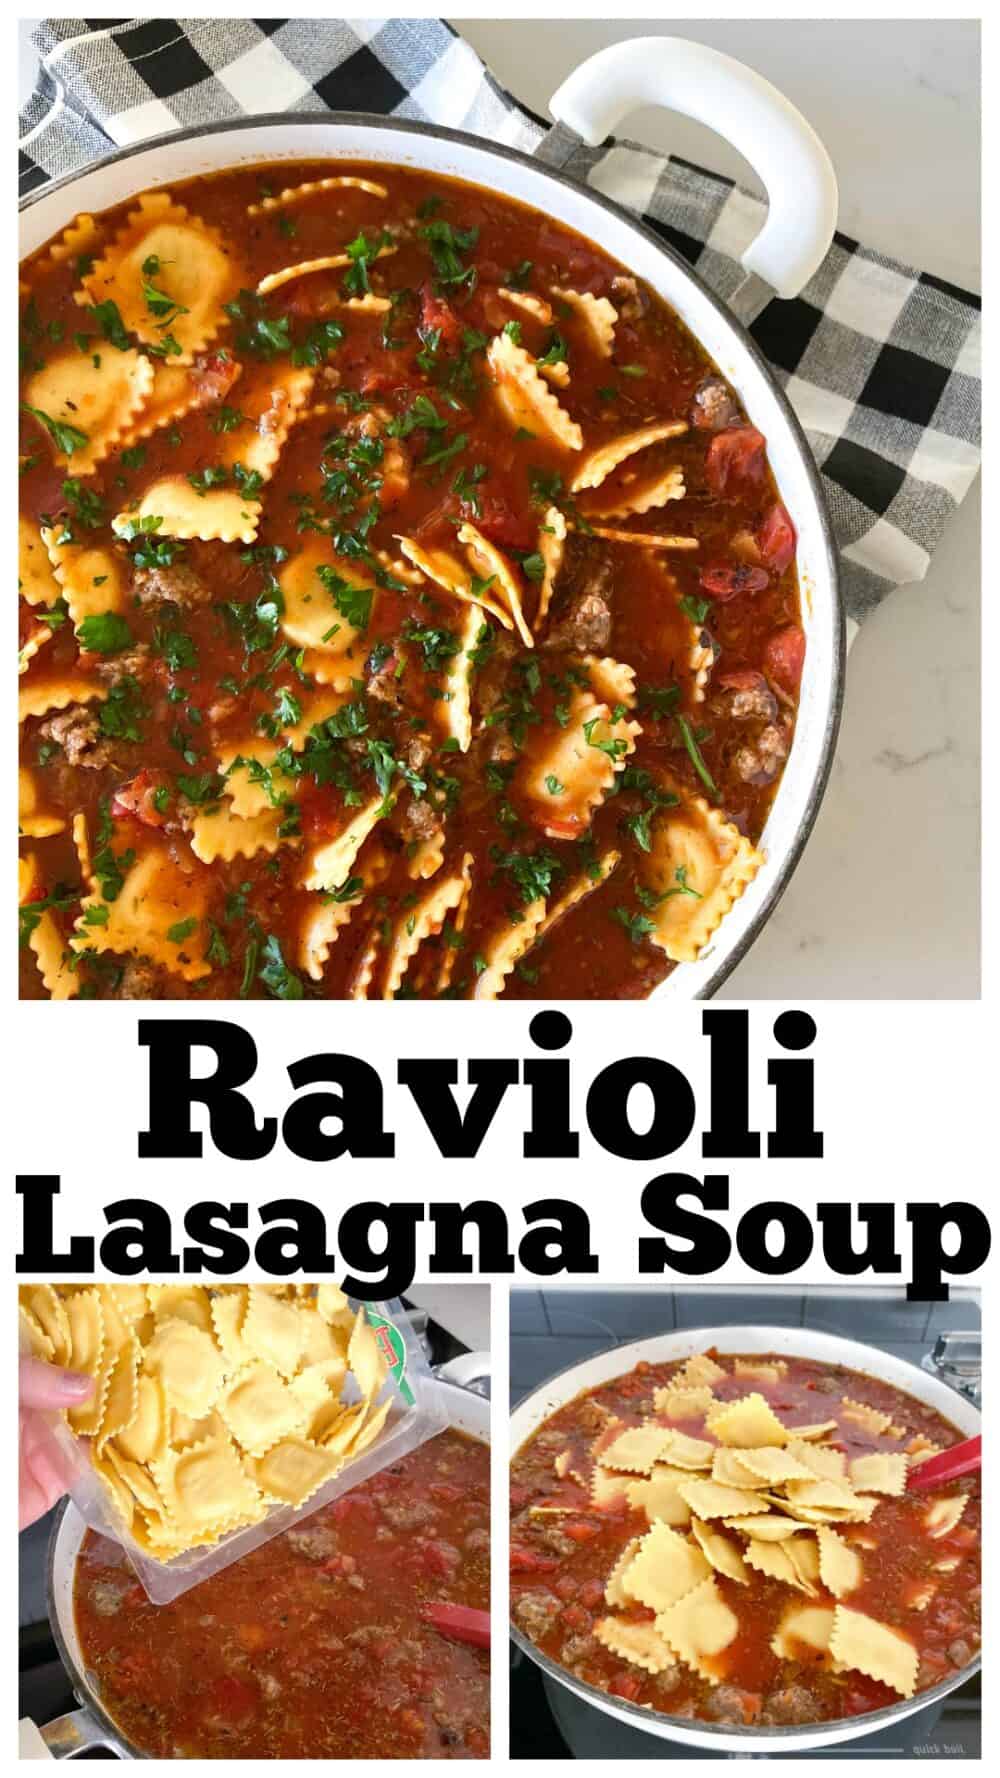 photo collage of lasagna soup